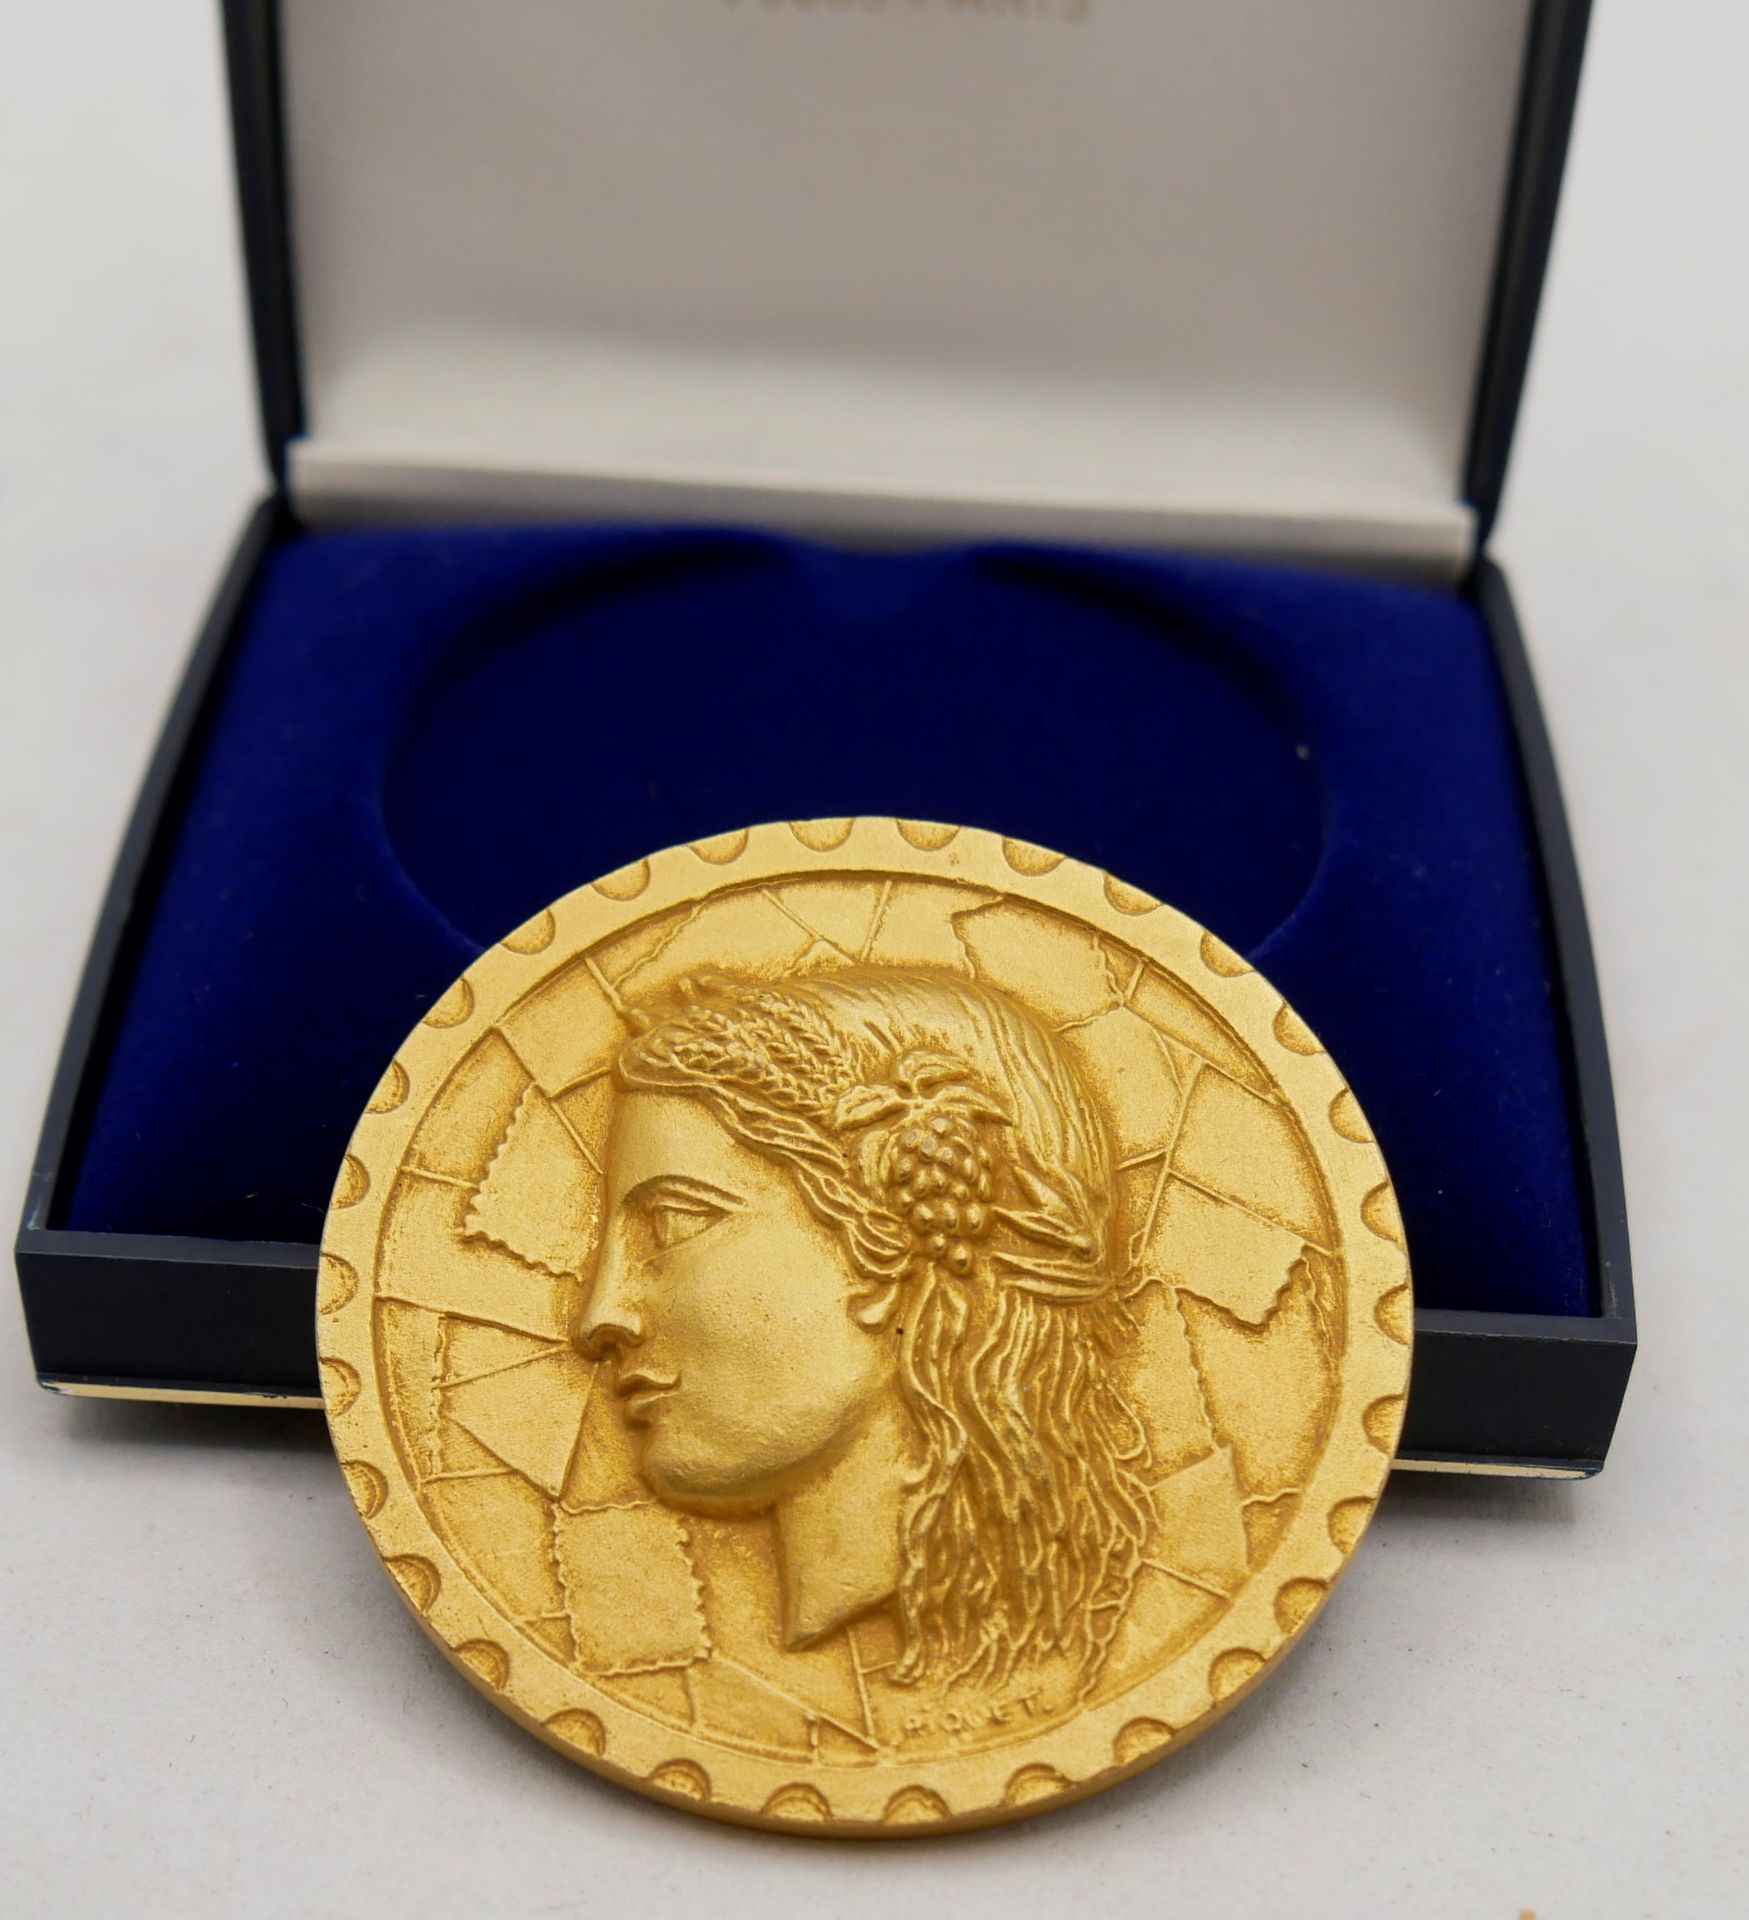 1 Medaille von Riquet Freres Paris für 90 ANS A.P.S. Epernay, 17 Avril 1988 Congress III, Region - Image 4 of 4